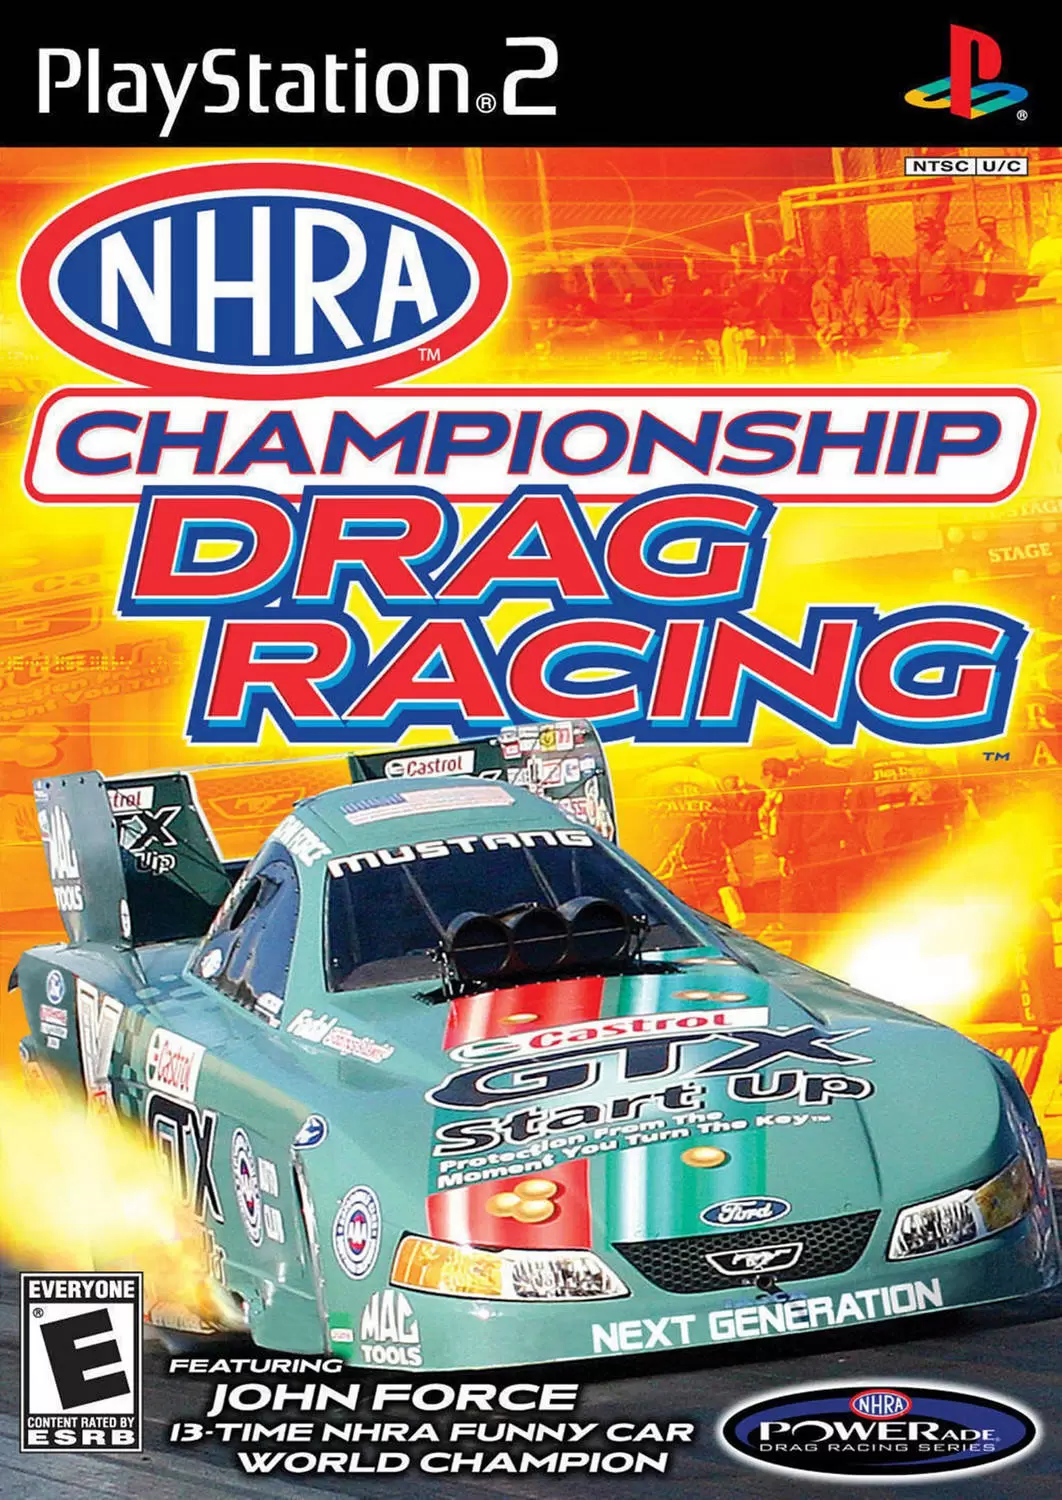 PS2 Games - NHRA Championship Drag Racing